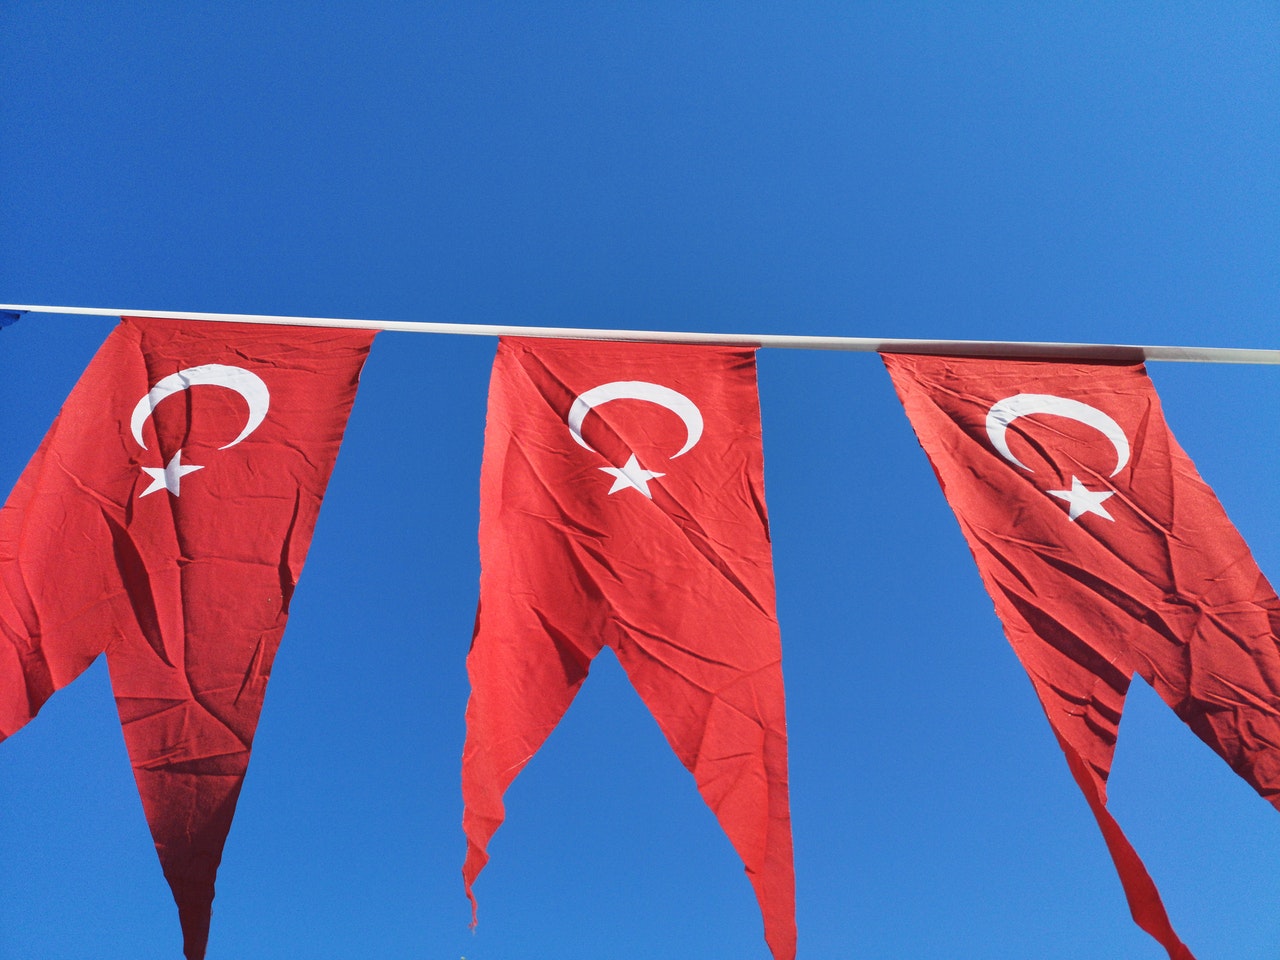 Turkish flags against a blue sky